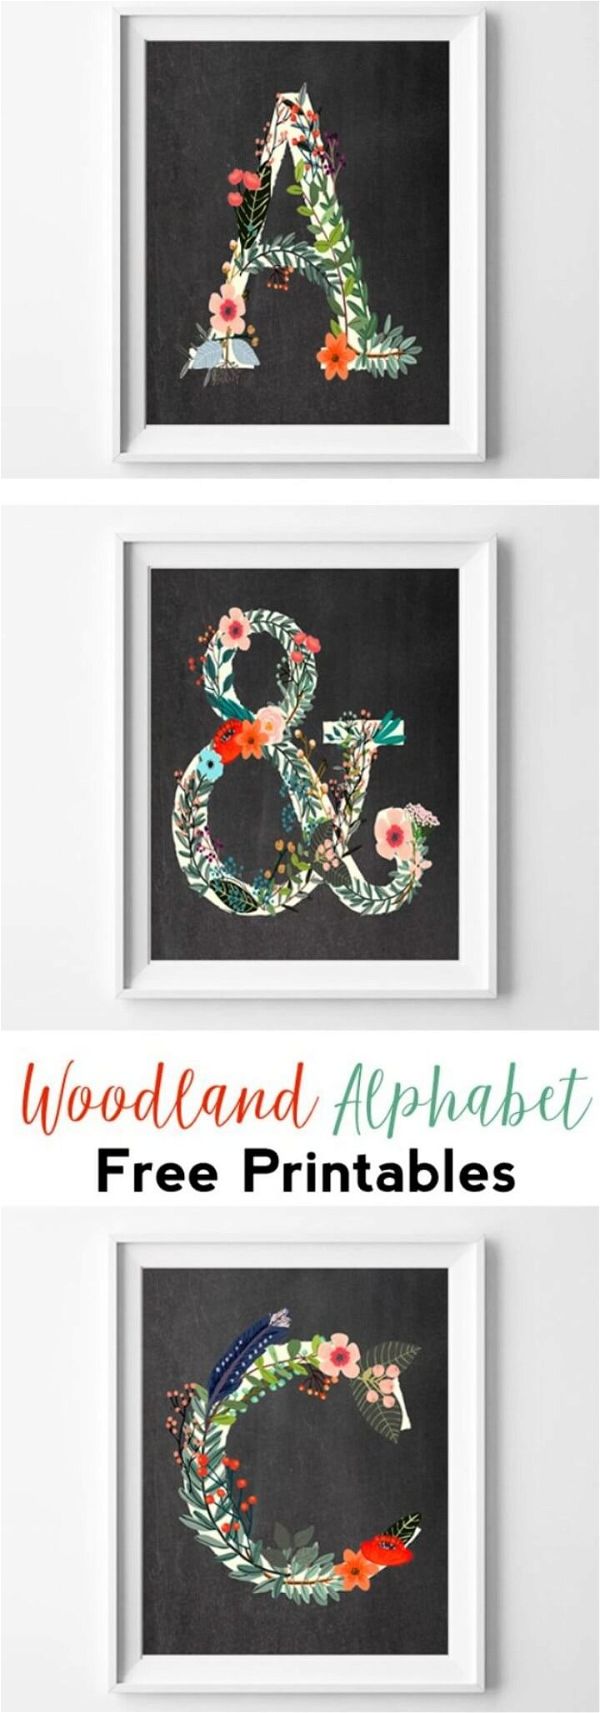 Woodland Alphabet Free Printables